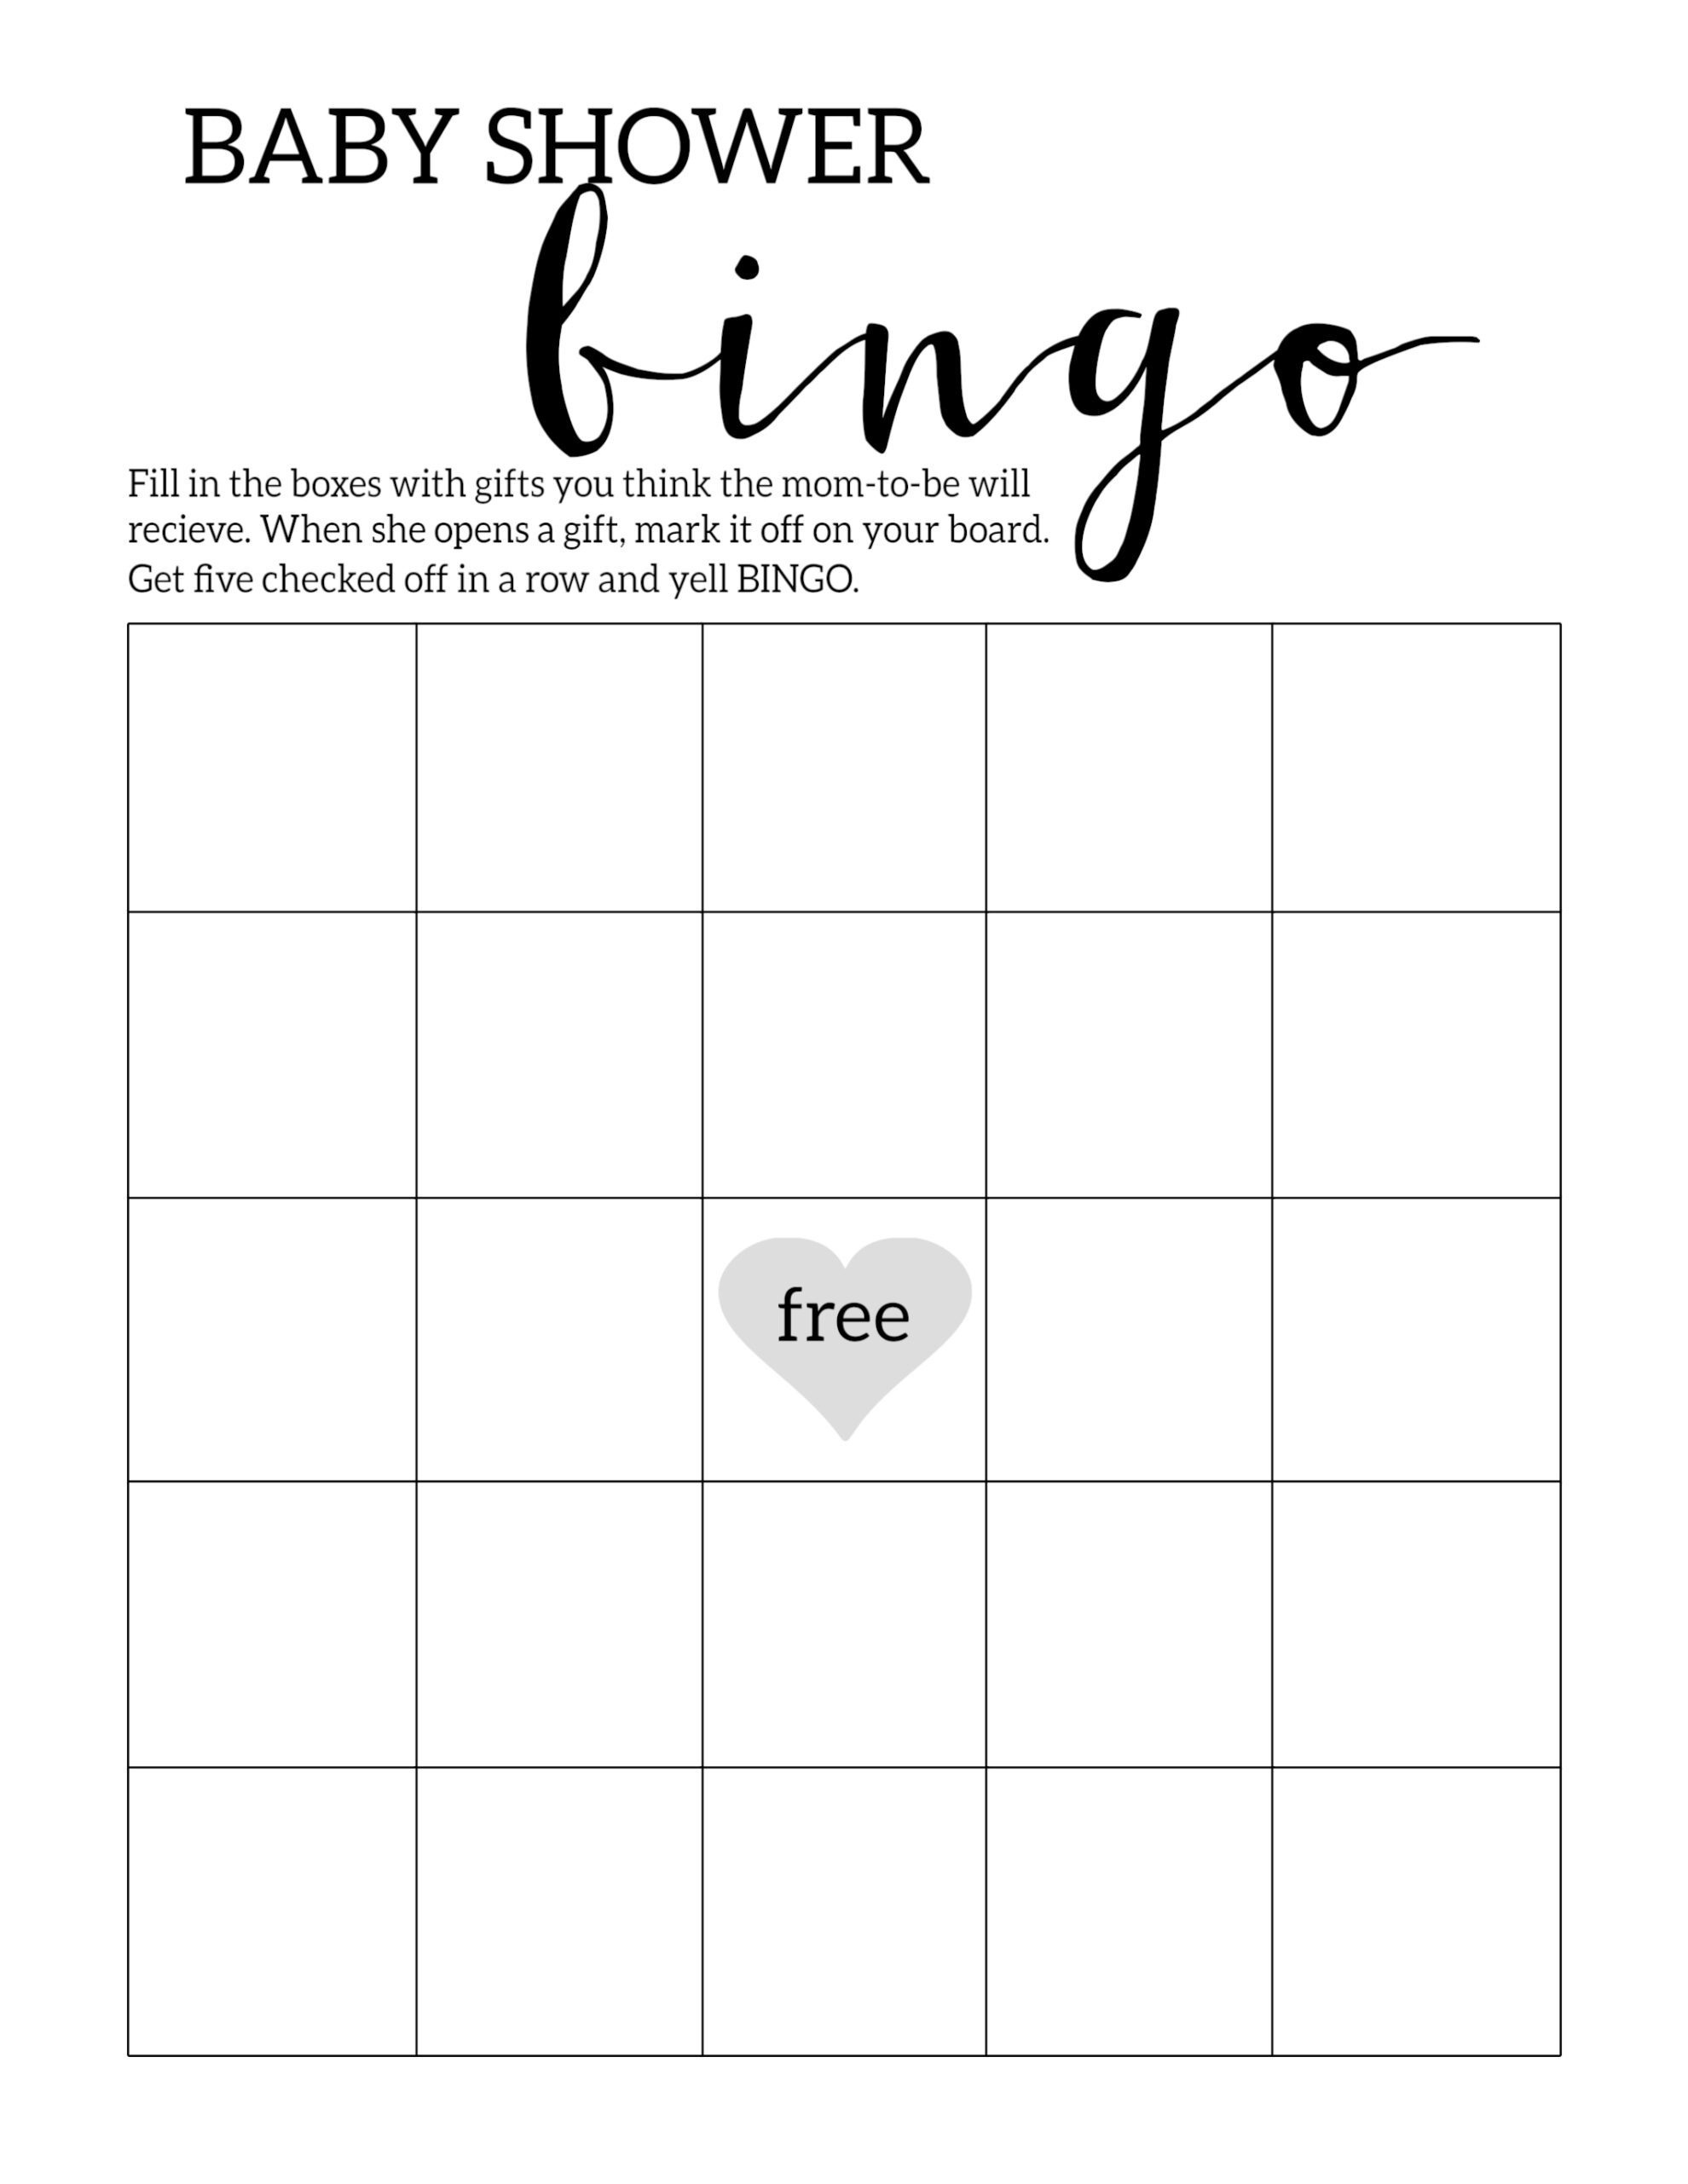 Baby Shower Bingo Printable Cards Template - Paper Trail Design - Free Printable Blank Bingo Cards